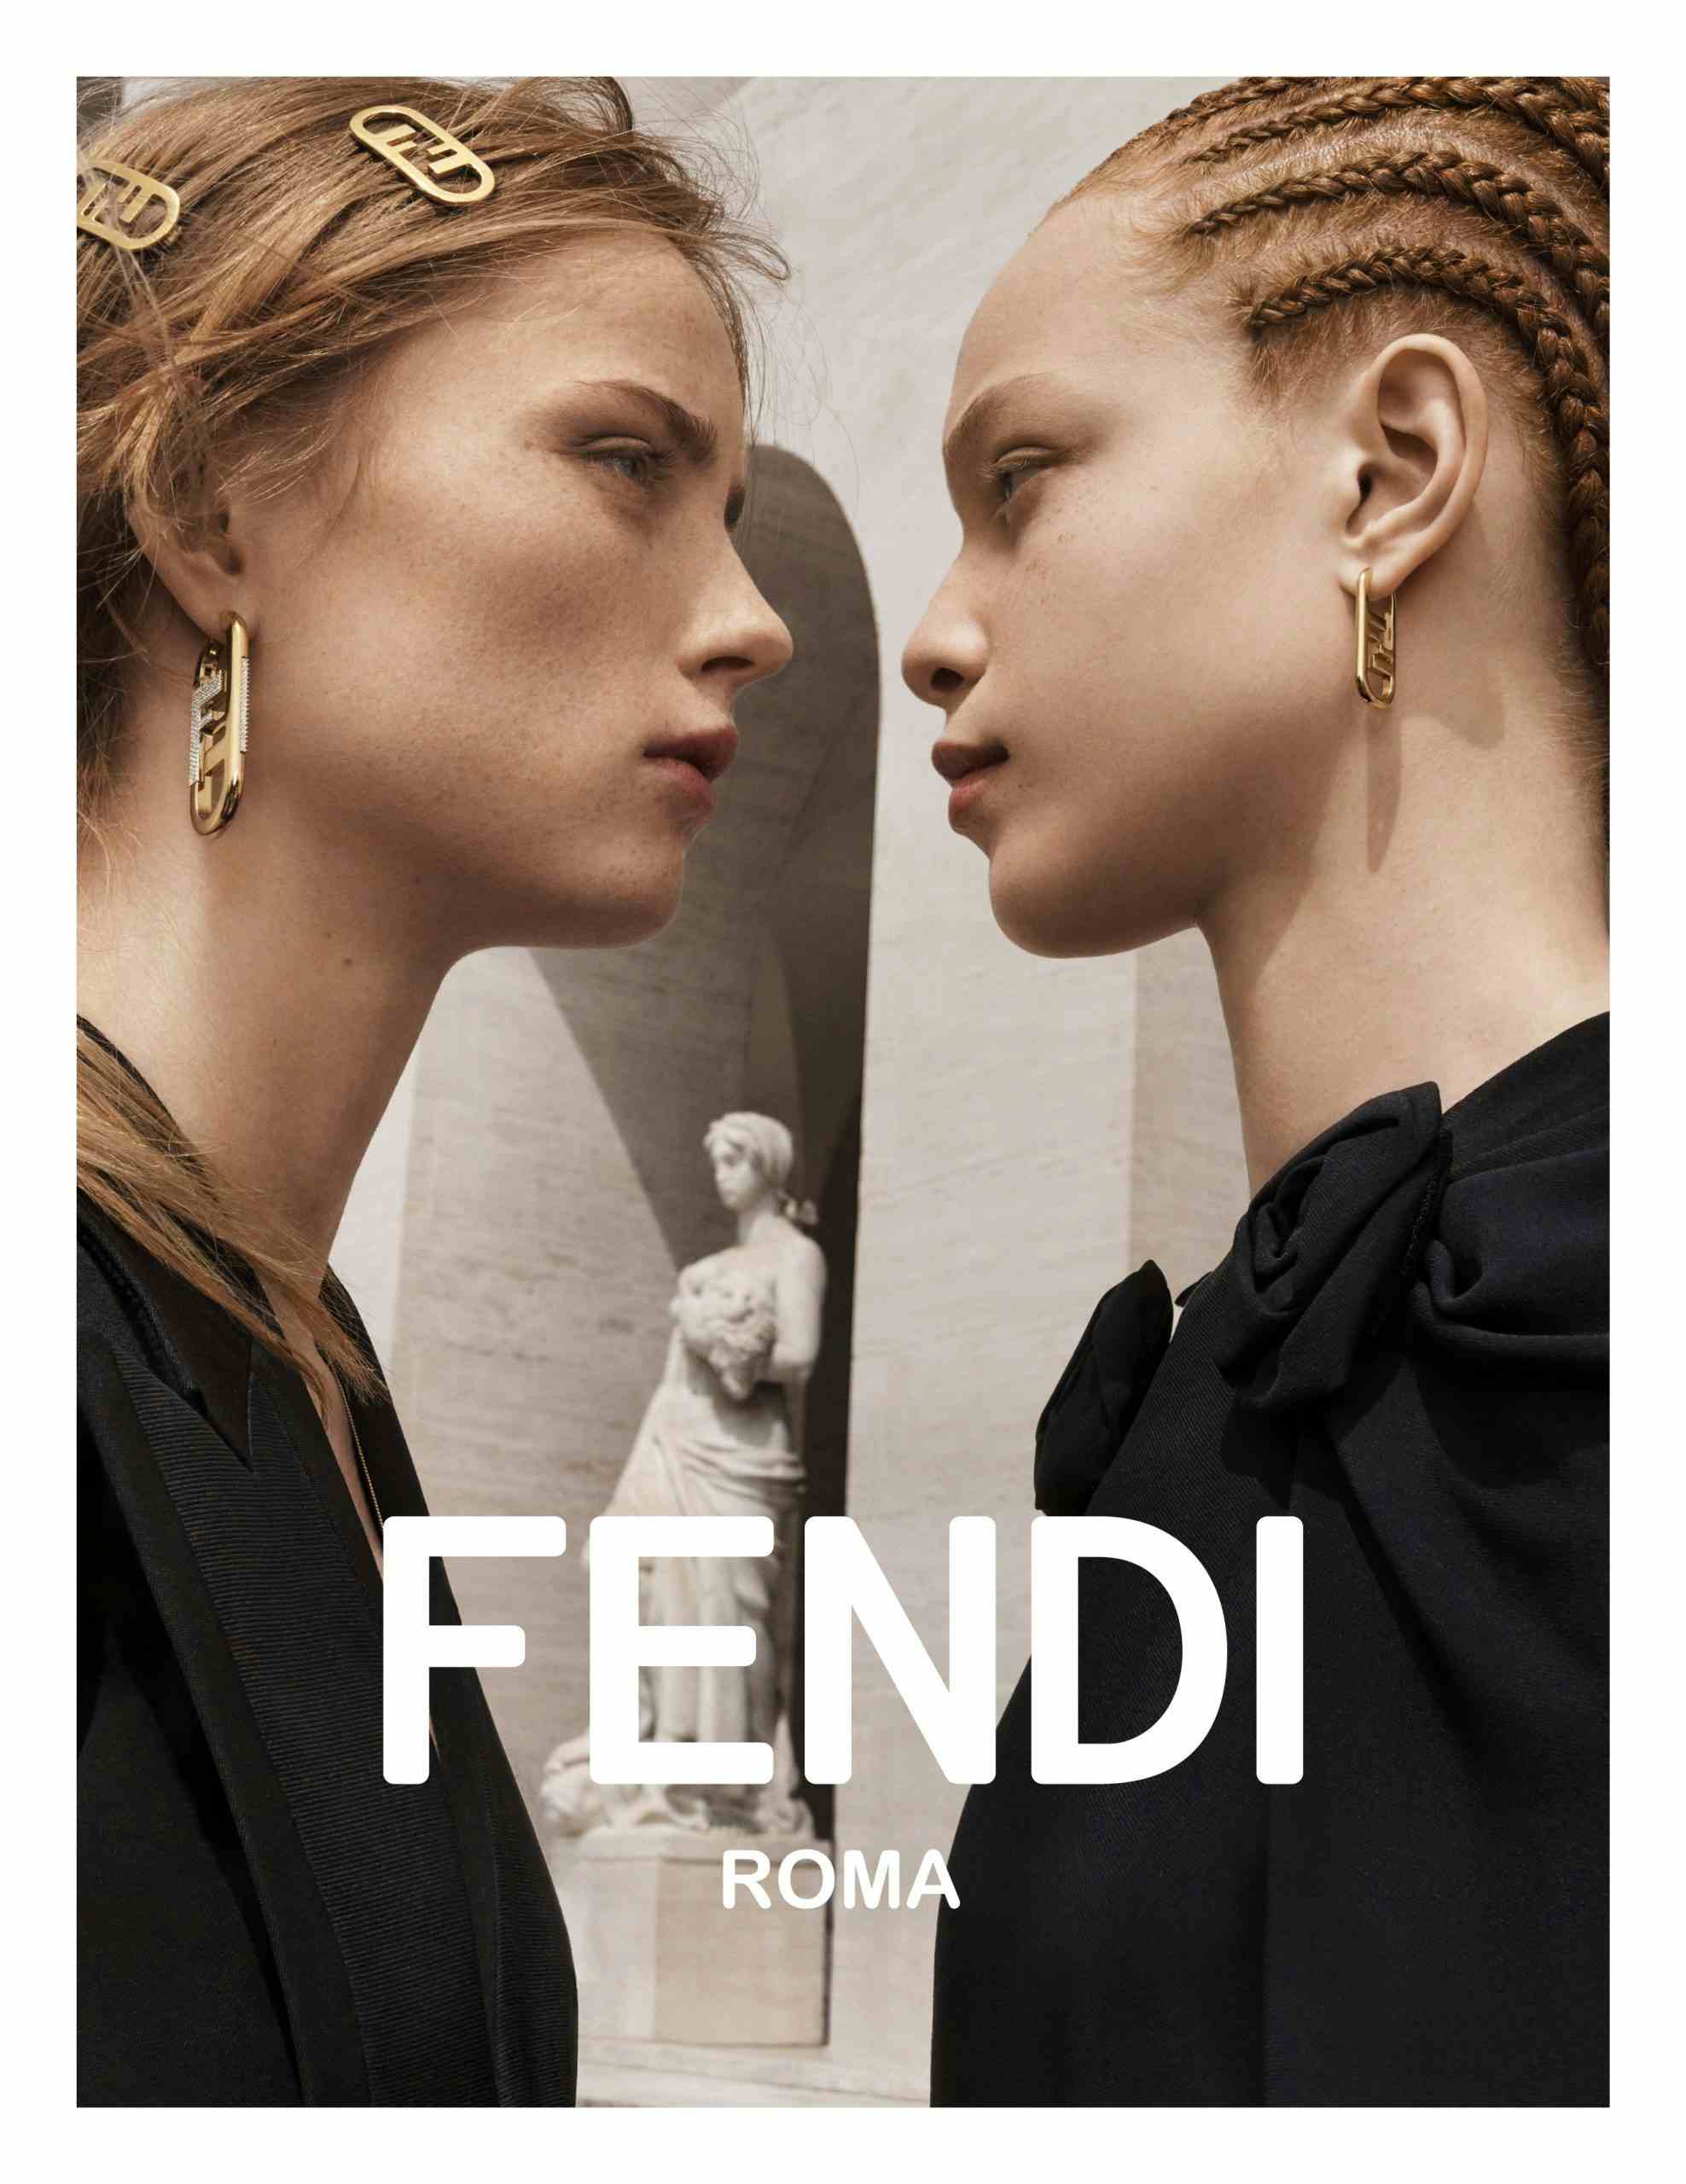 FENDI - FW21
Photographer: Craig McDean
Model: Rianne Van Rompaey, Malika Louback, He Cong, Tianna St Louis
Stylist: Melanie Ward
Location: Rome